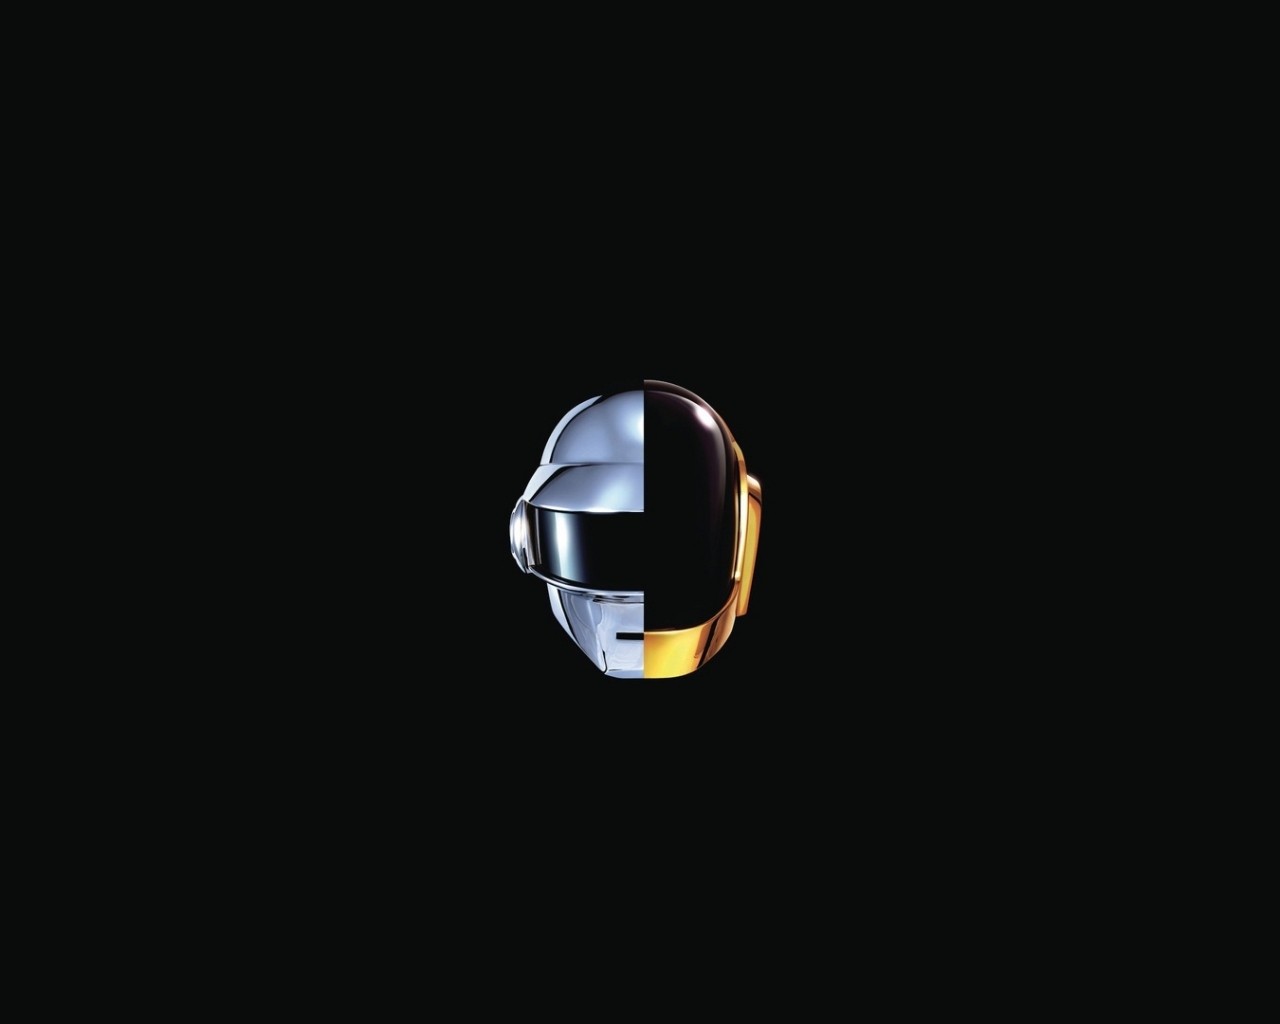 General 1280x1024 Daft Punk music minimalism electronic music helmet simple background black background artwork musician